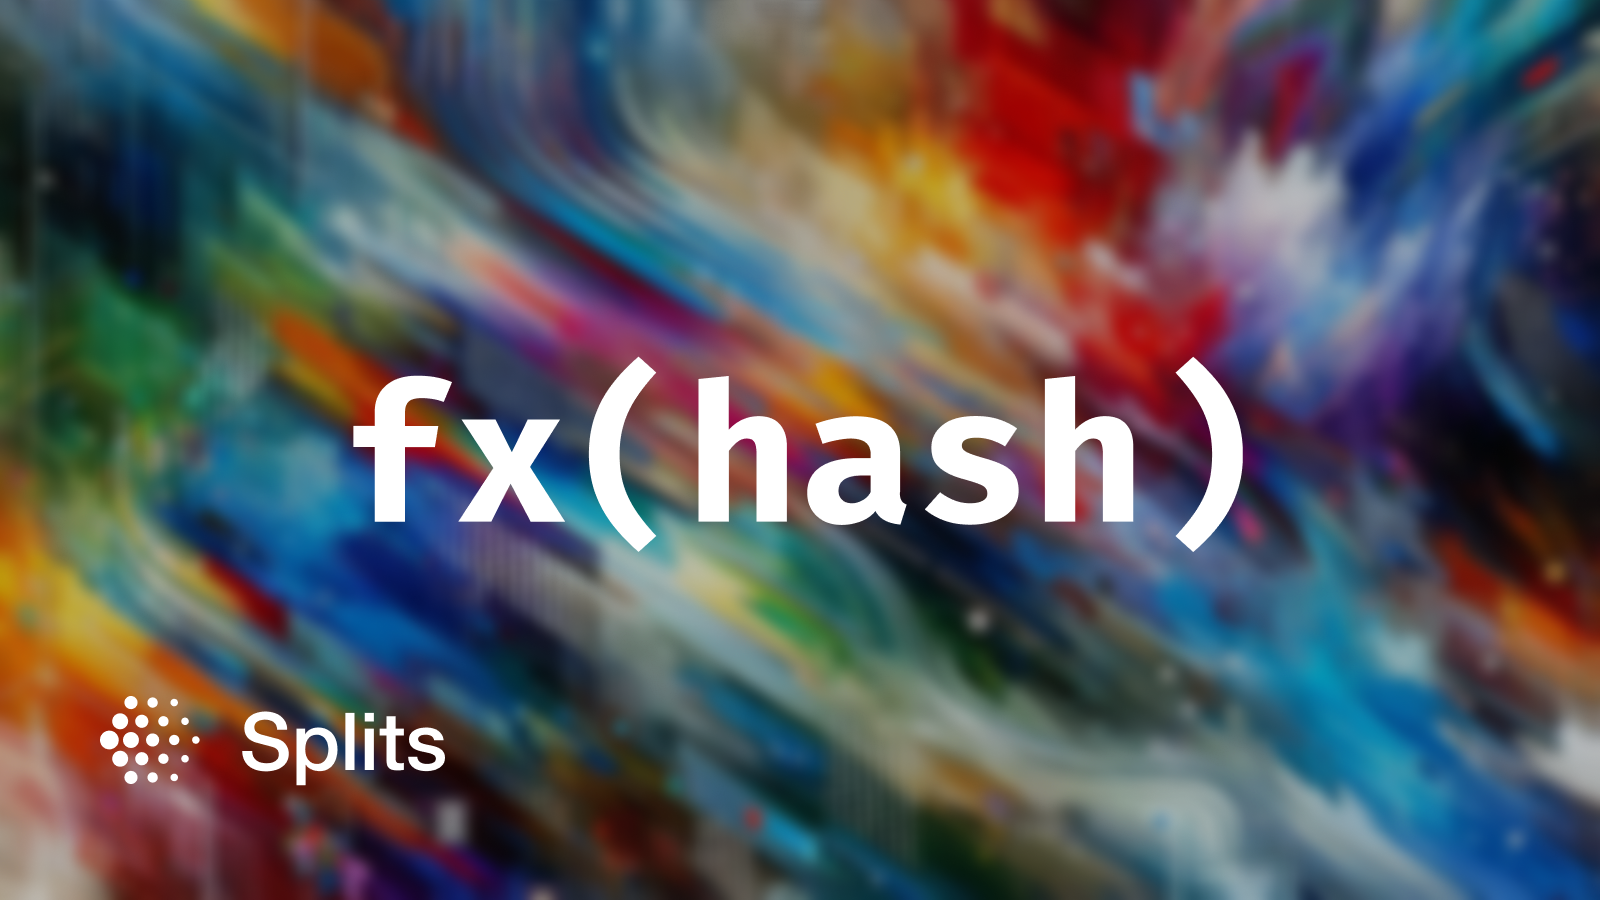 Programming dreams with fxhash